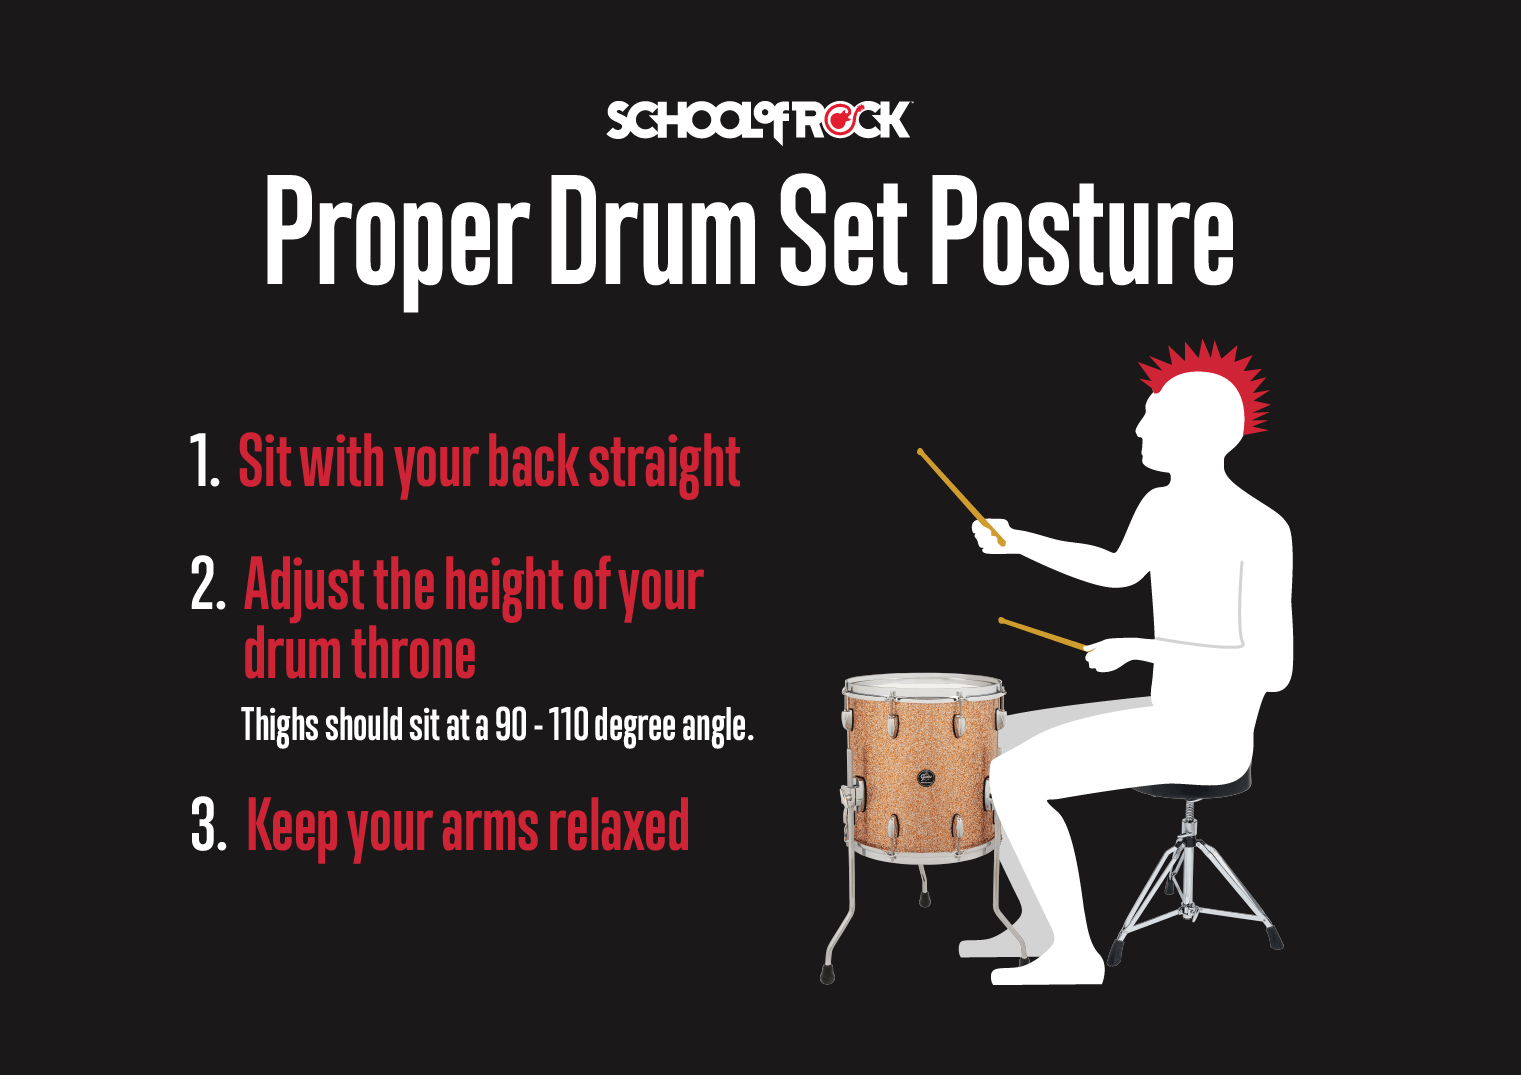 Proper drum set posture and drum throne height